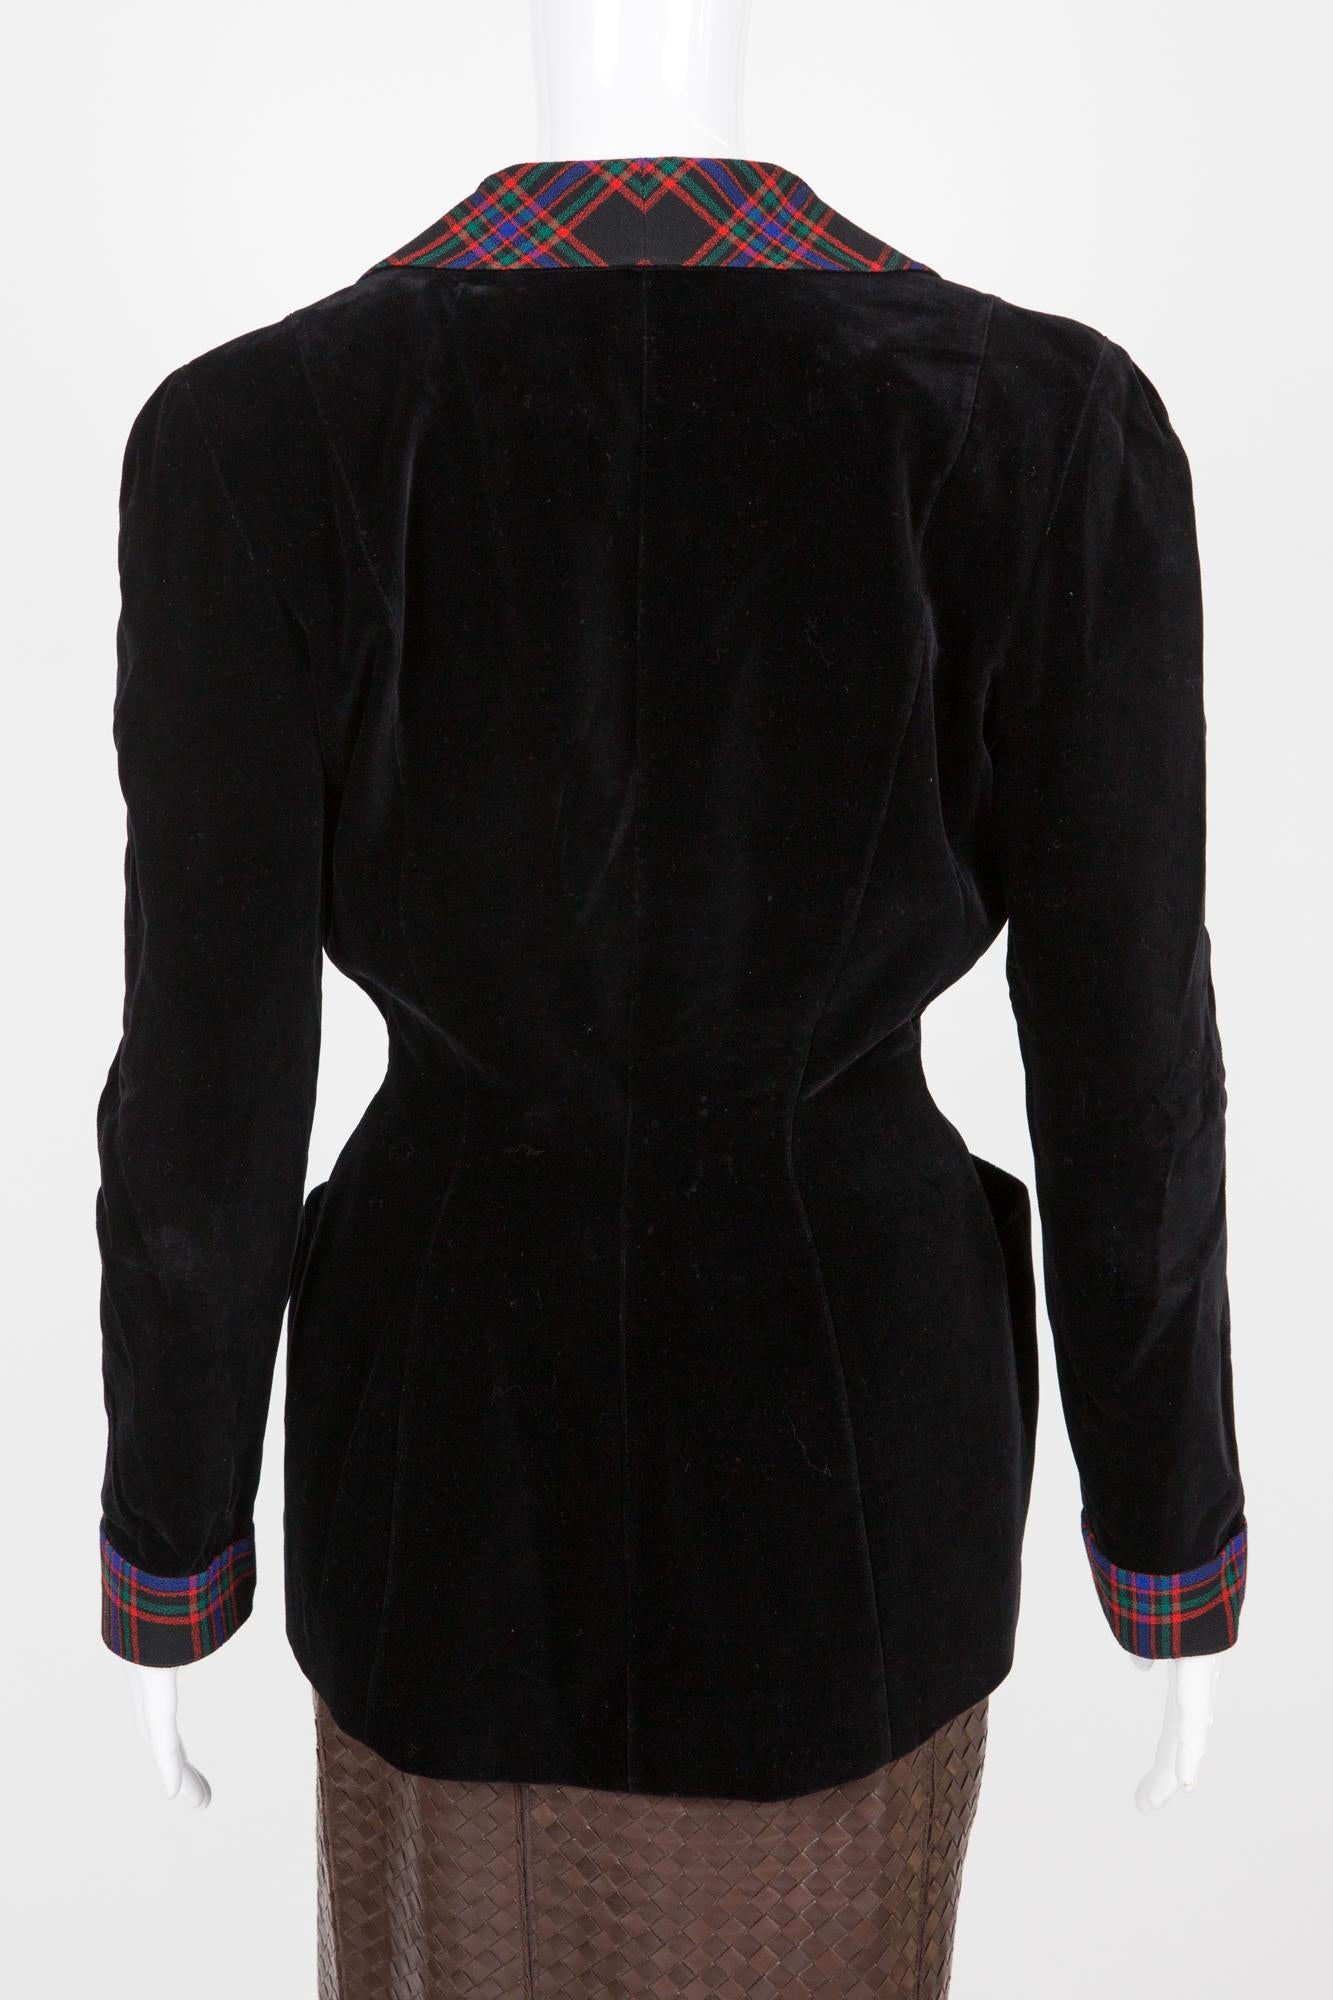 Thierry Mugler black cotton velvet  jacket featuring a contrasted Tartan wool collar, Tartan cuffs, velvet buttons opening, longer at back.
Circa: 1980s
Velvet: Cotton 100%
Tartan details: wool 100%
In good vintage condition. 
Made in France.